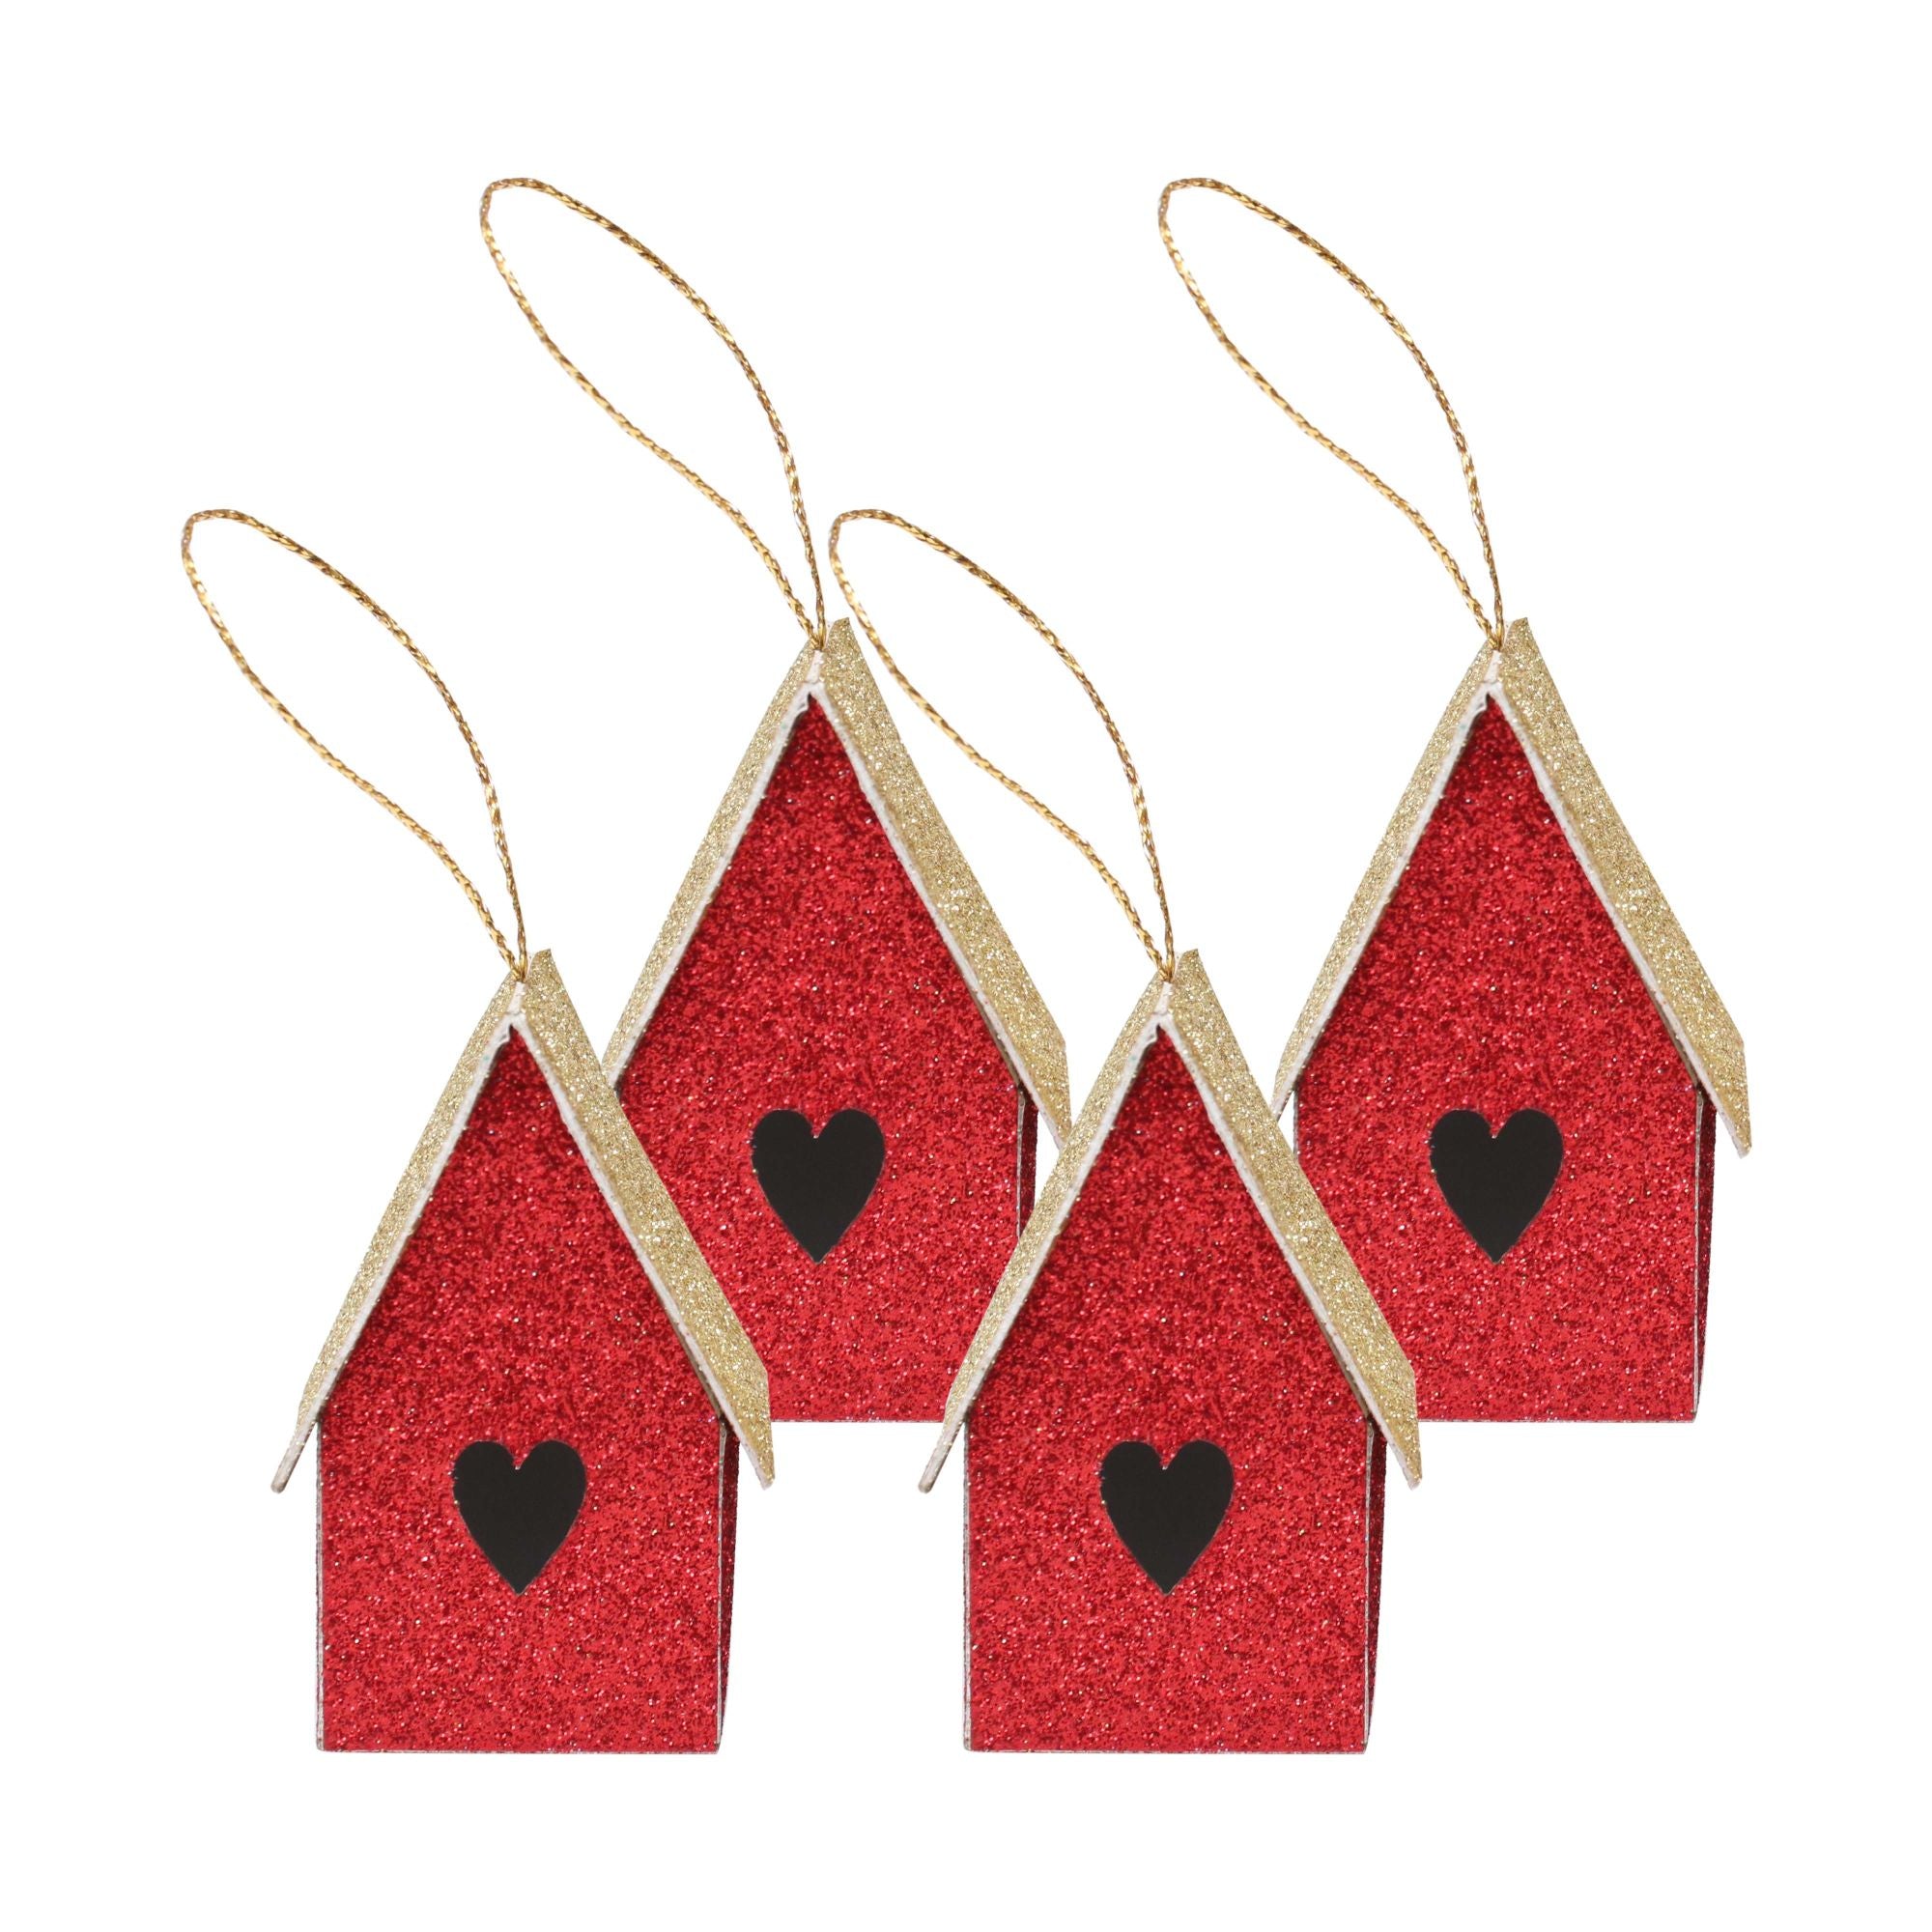 Handmade Christmas Ornaments - Glitter Bird house, Height 2.5 X Width 2.5 X Length 1.5inch, Red, 4pc